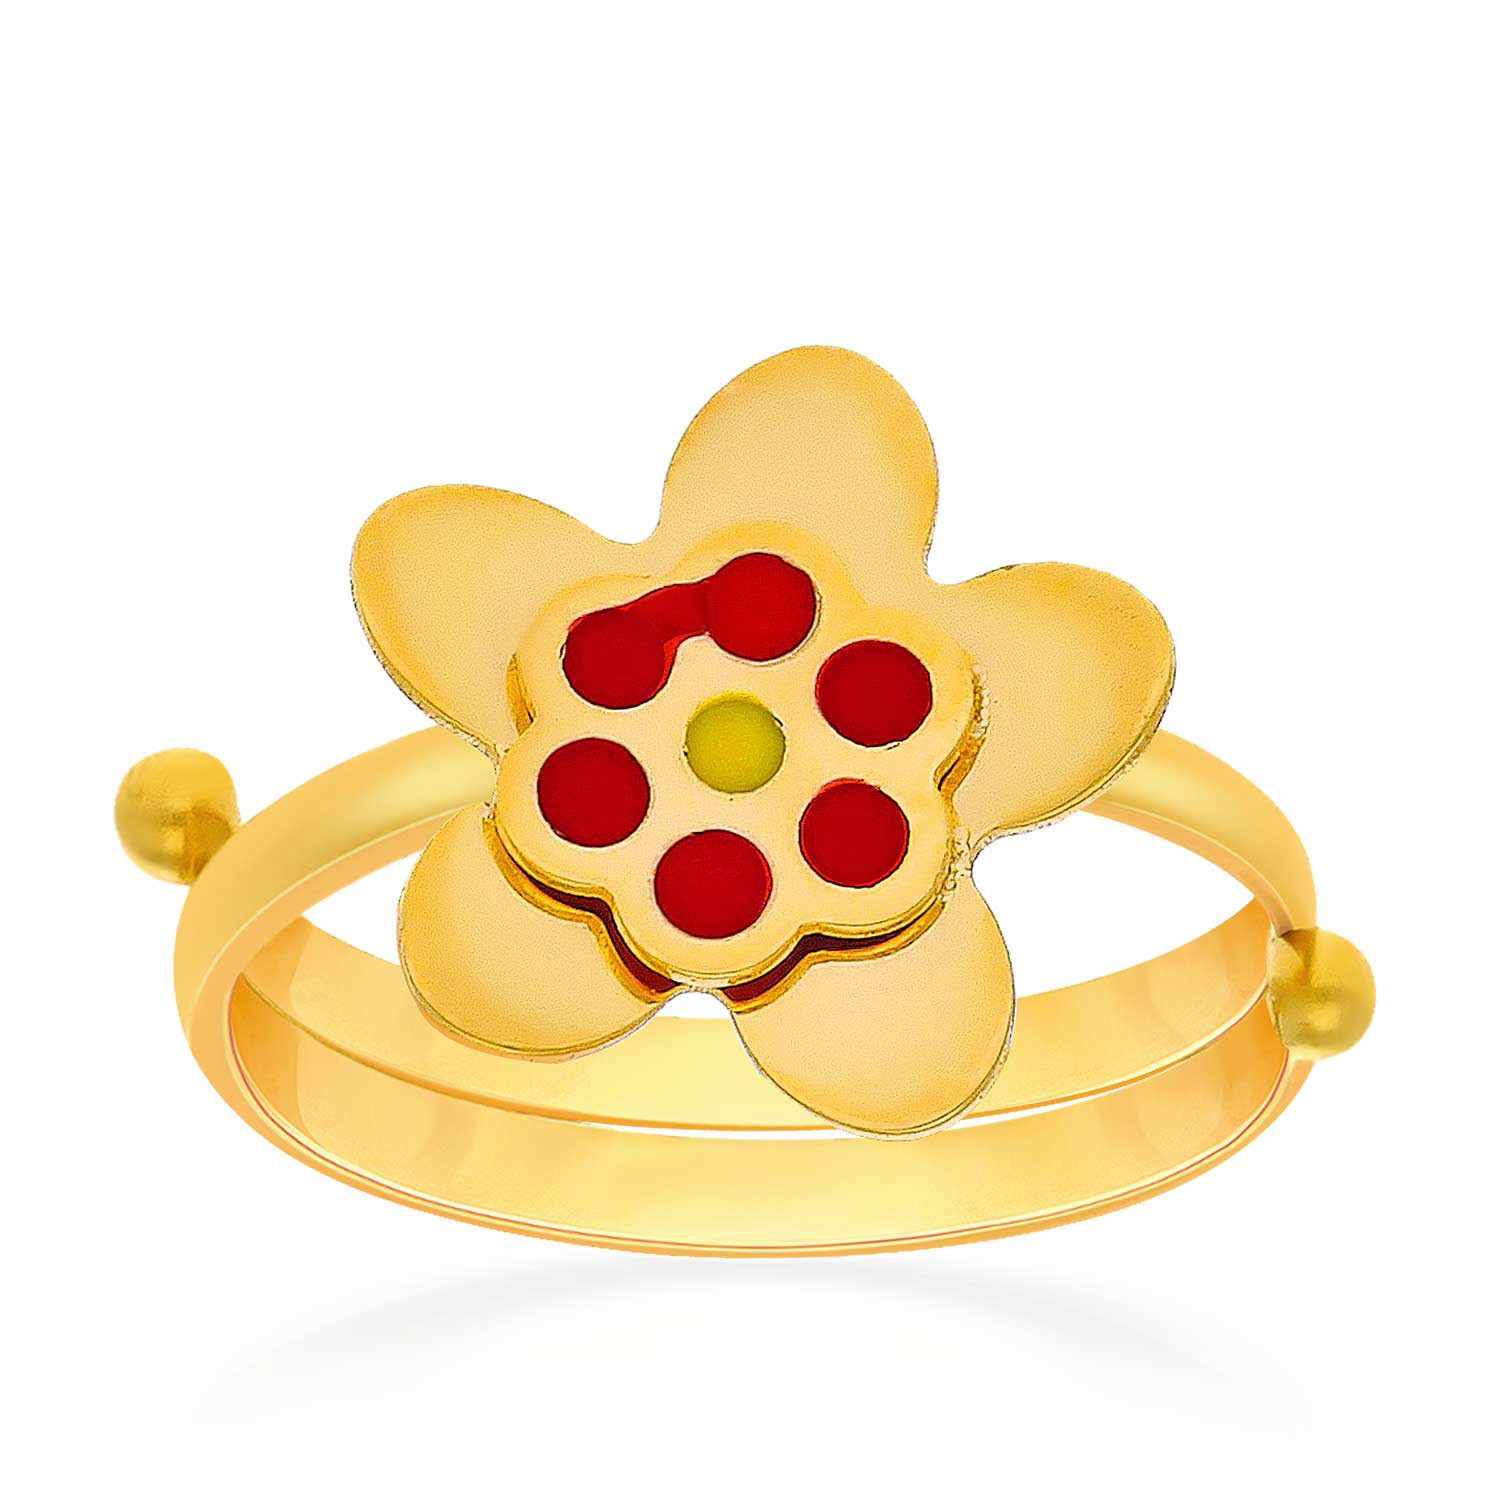 Starlet Gold Ring RG9241657